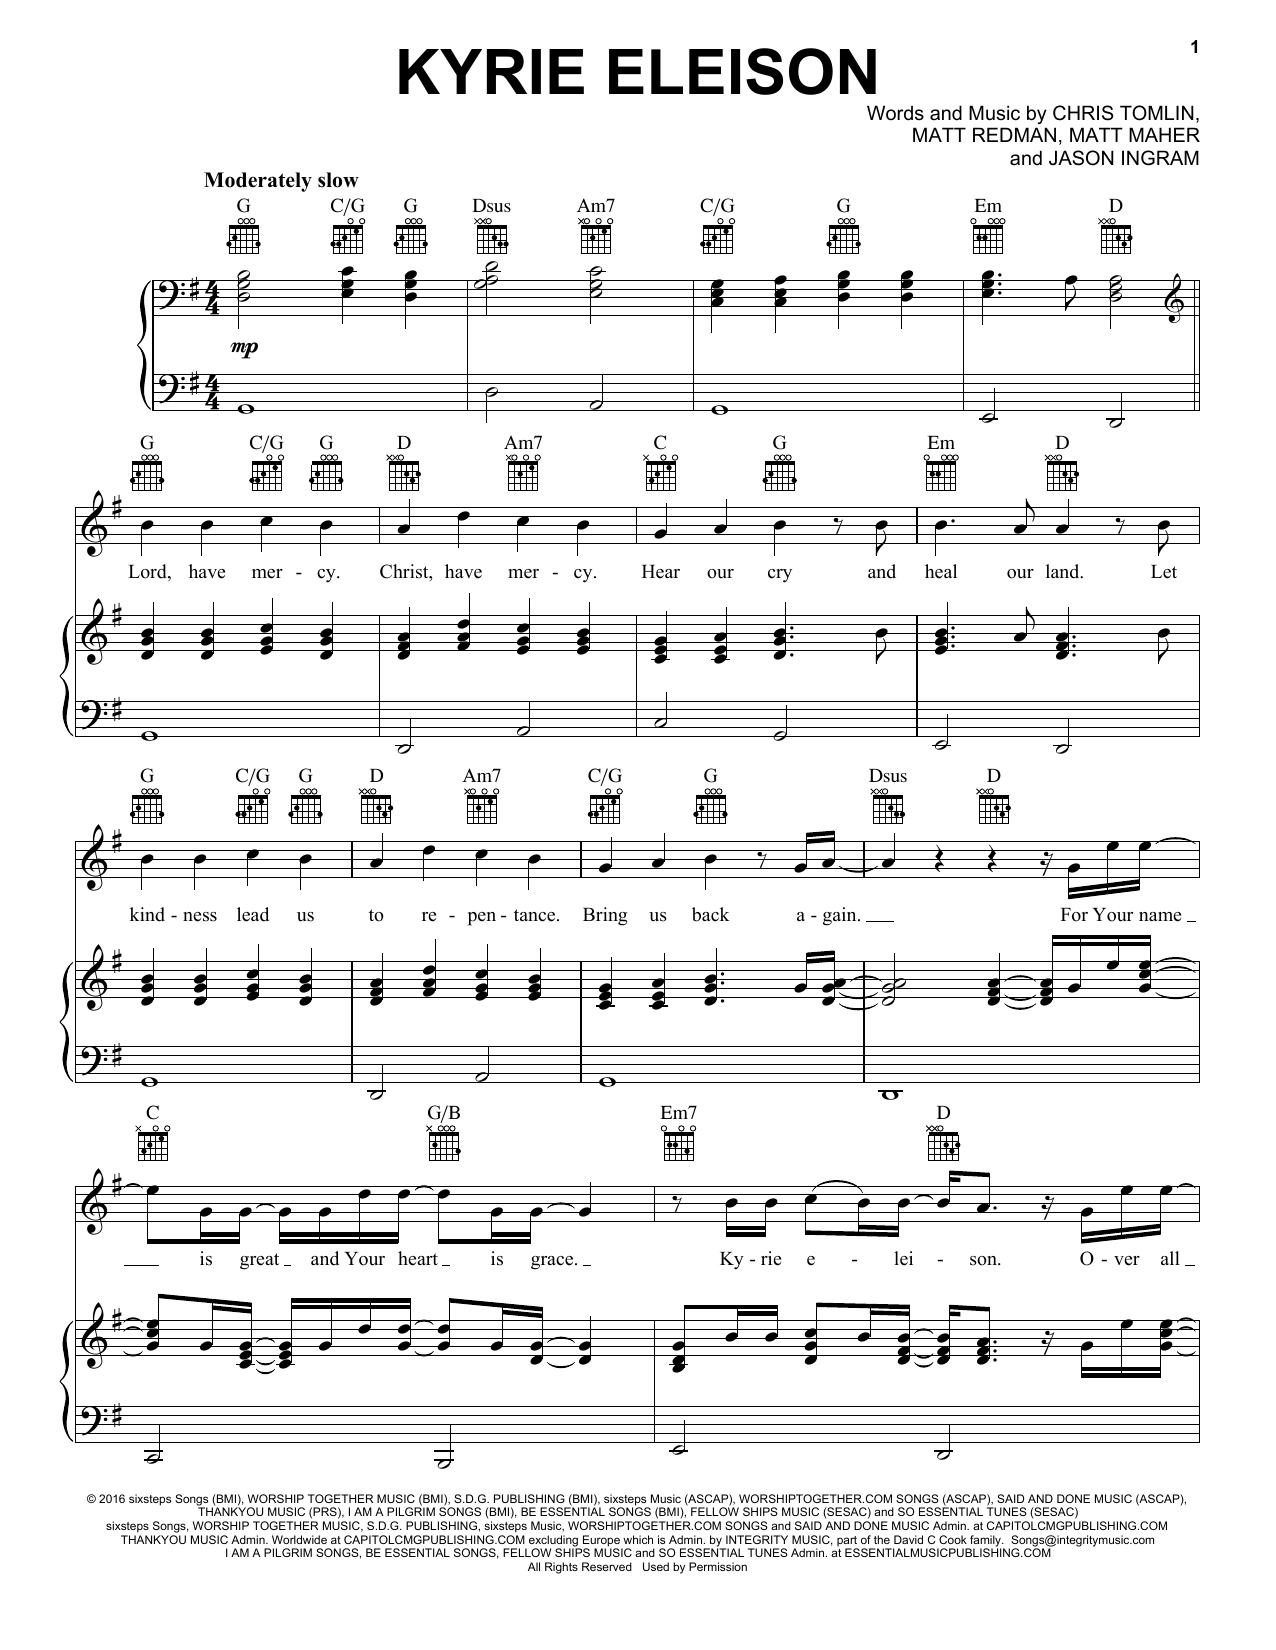 Chris Tomlin feat. Matt Maher, Matt Redman and Jason Ingram Kyrie Eleison sheet music notes and chords arranged for Piano, Vocal & Guitar Chords (Right-Hand Melody)